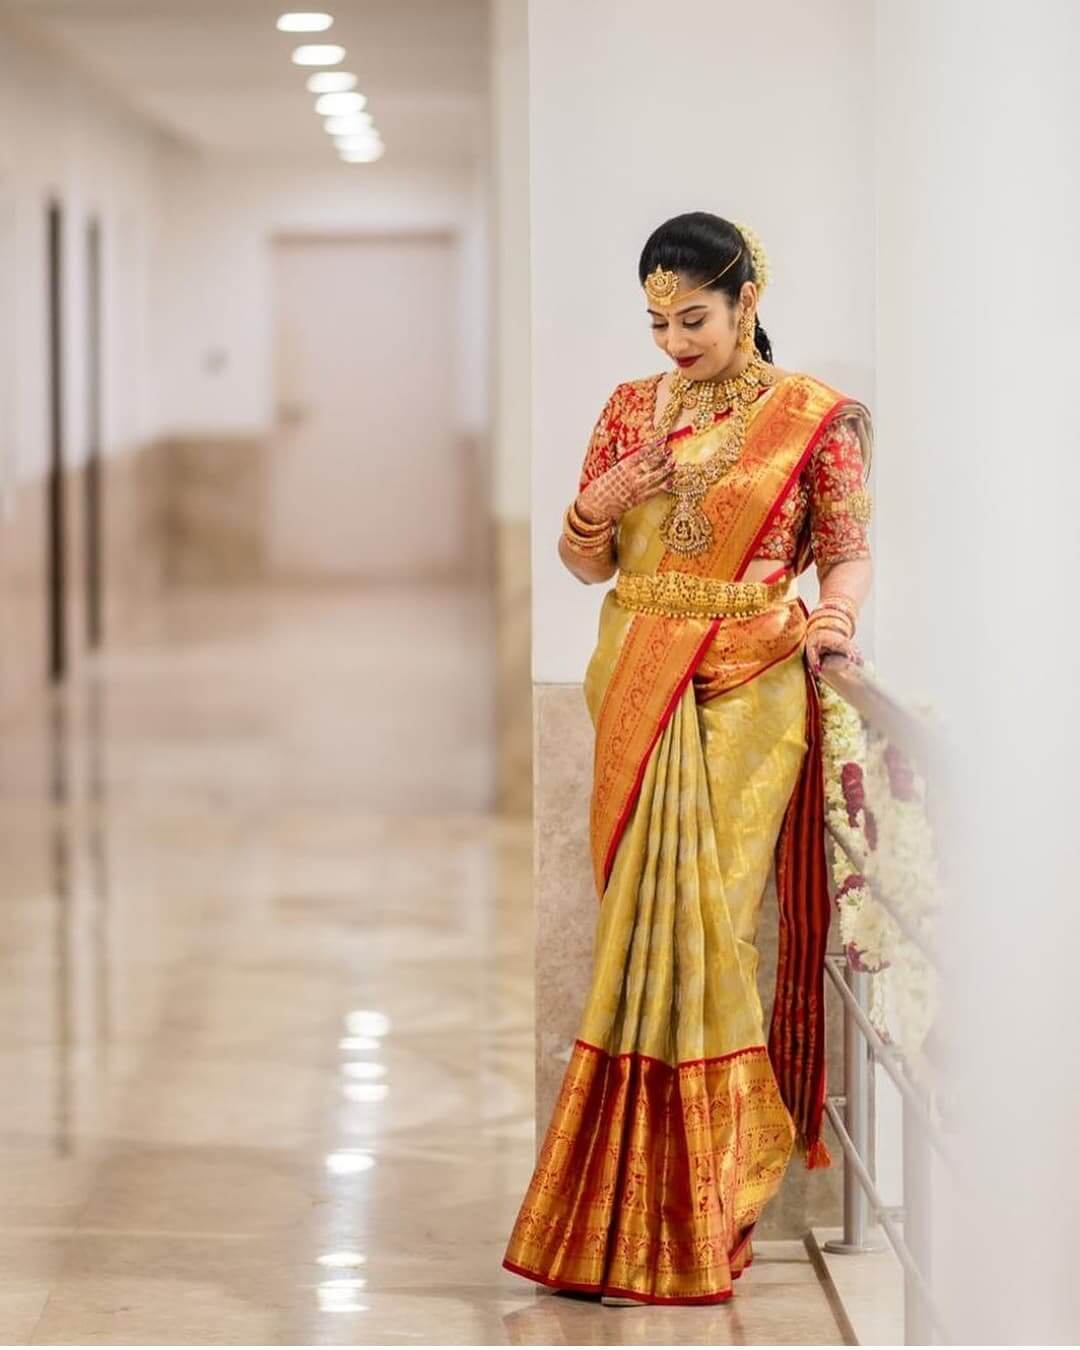 South Indian Wedding Saree for Traditional Bride Kanjivaram silk wedding saree in yellow and red